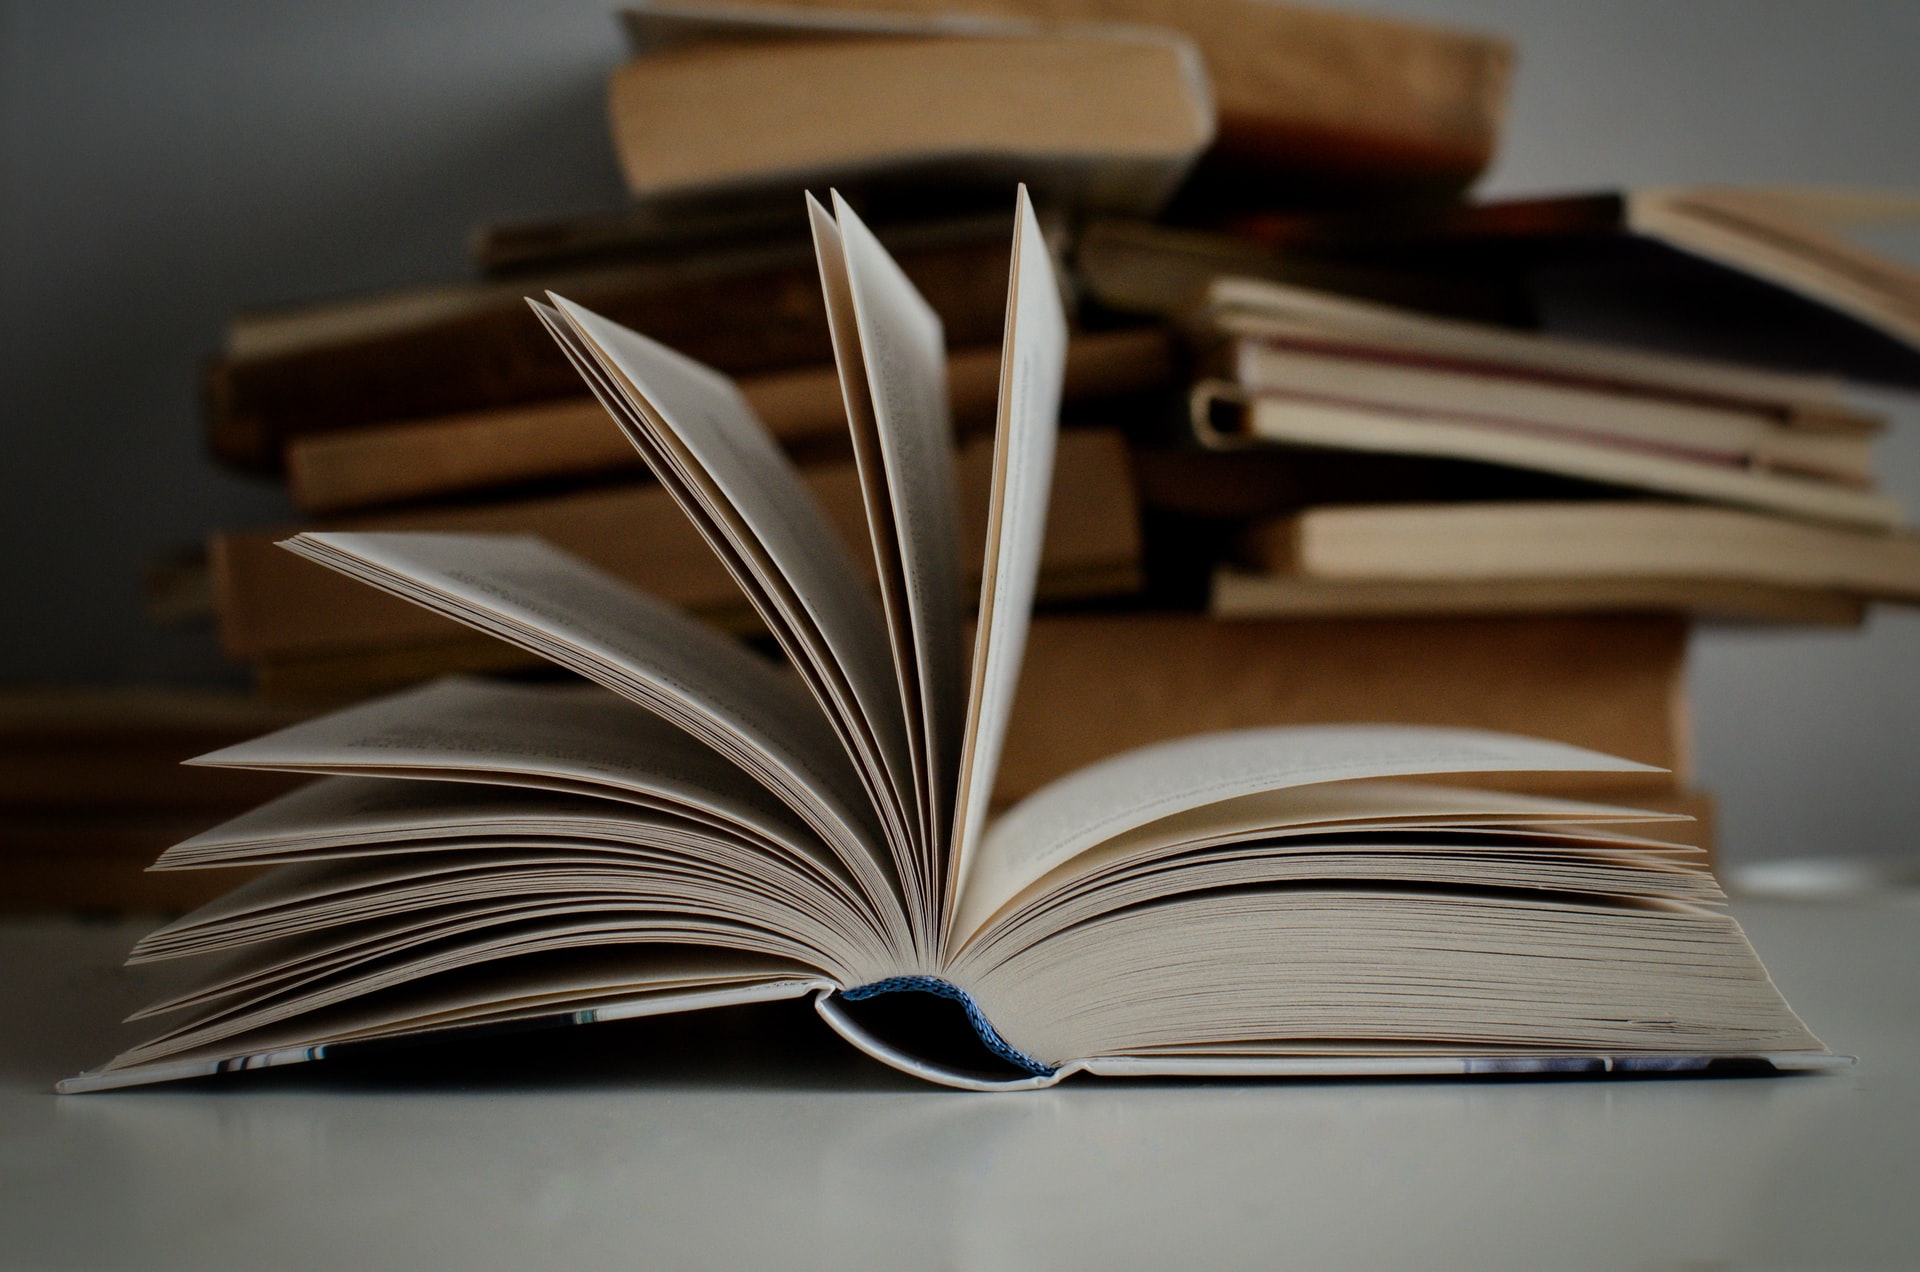 An open book (Photo by Mikolaj on Unsplash)